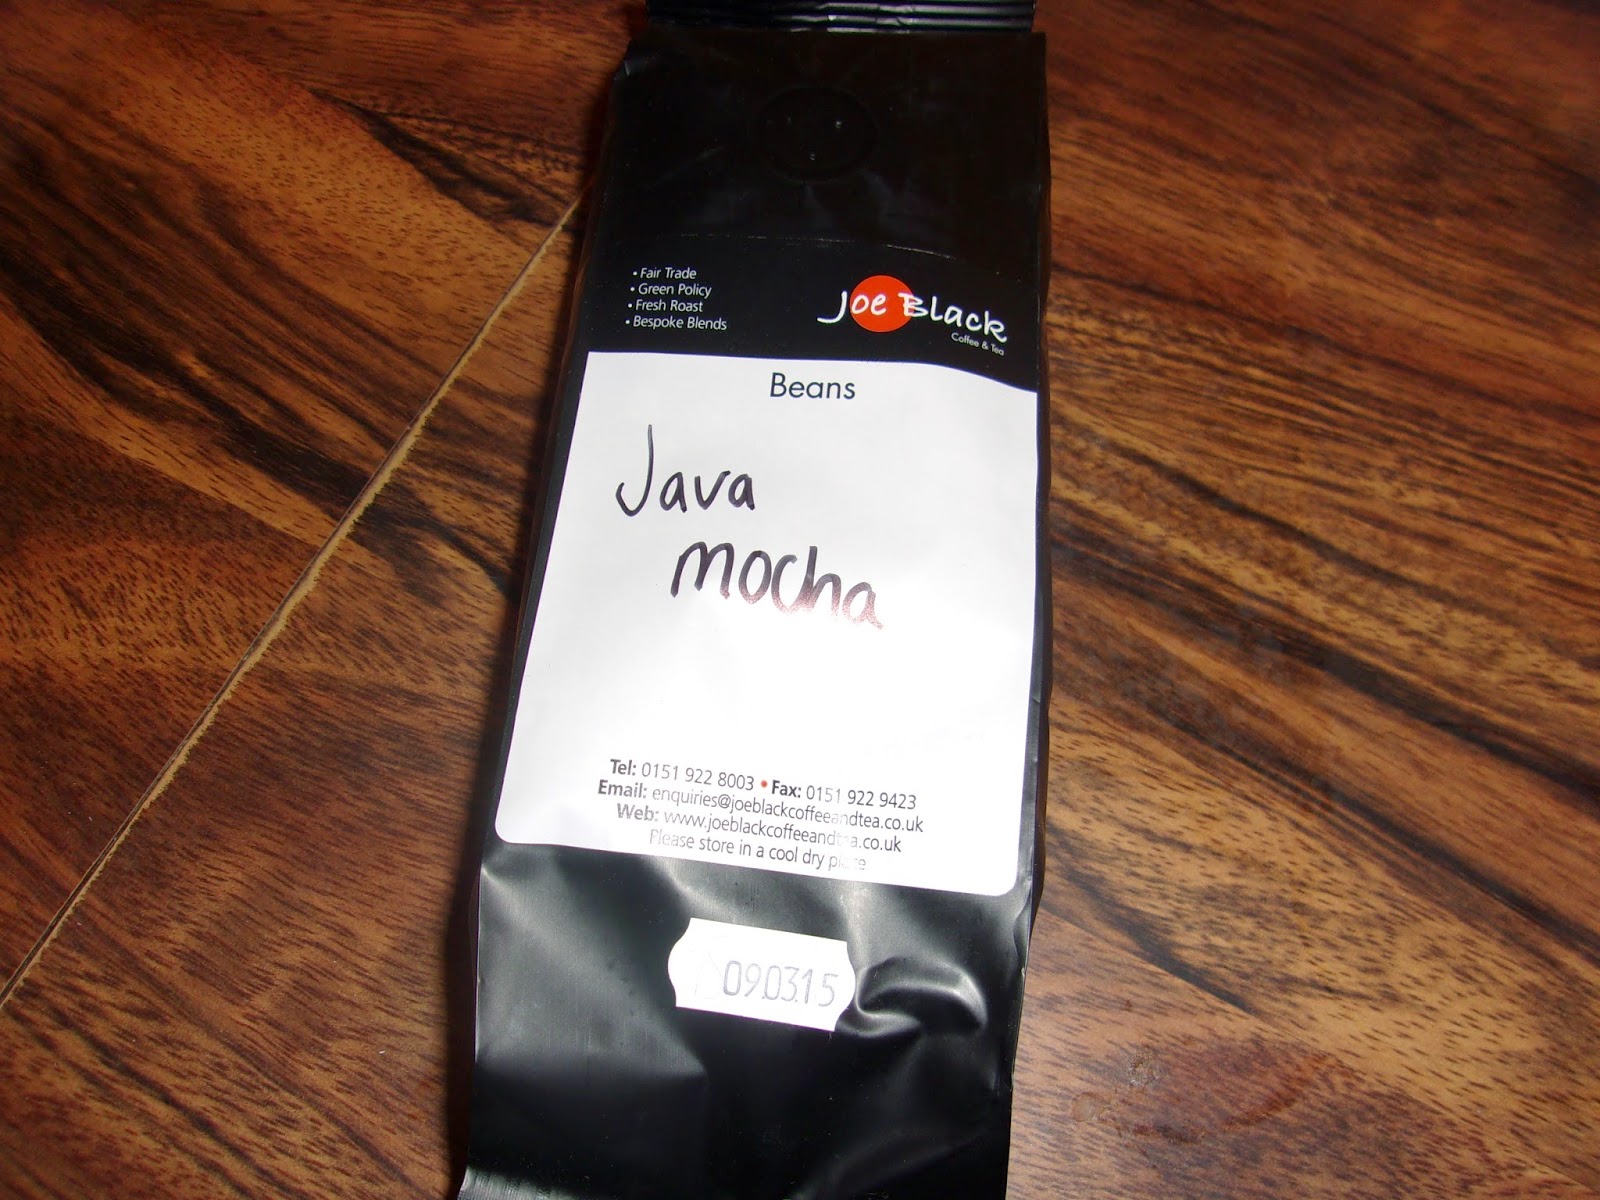 http://www.joeblackcoffee.co.uk/collections/coffee/products/java-mocha